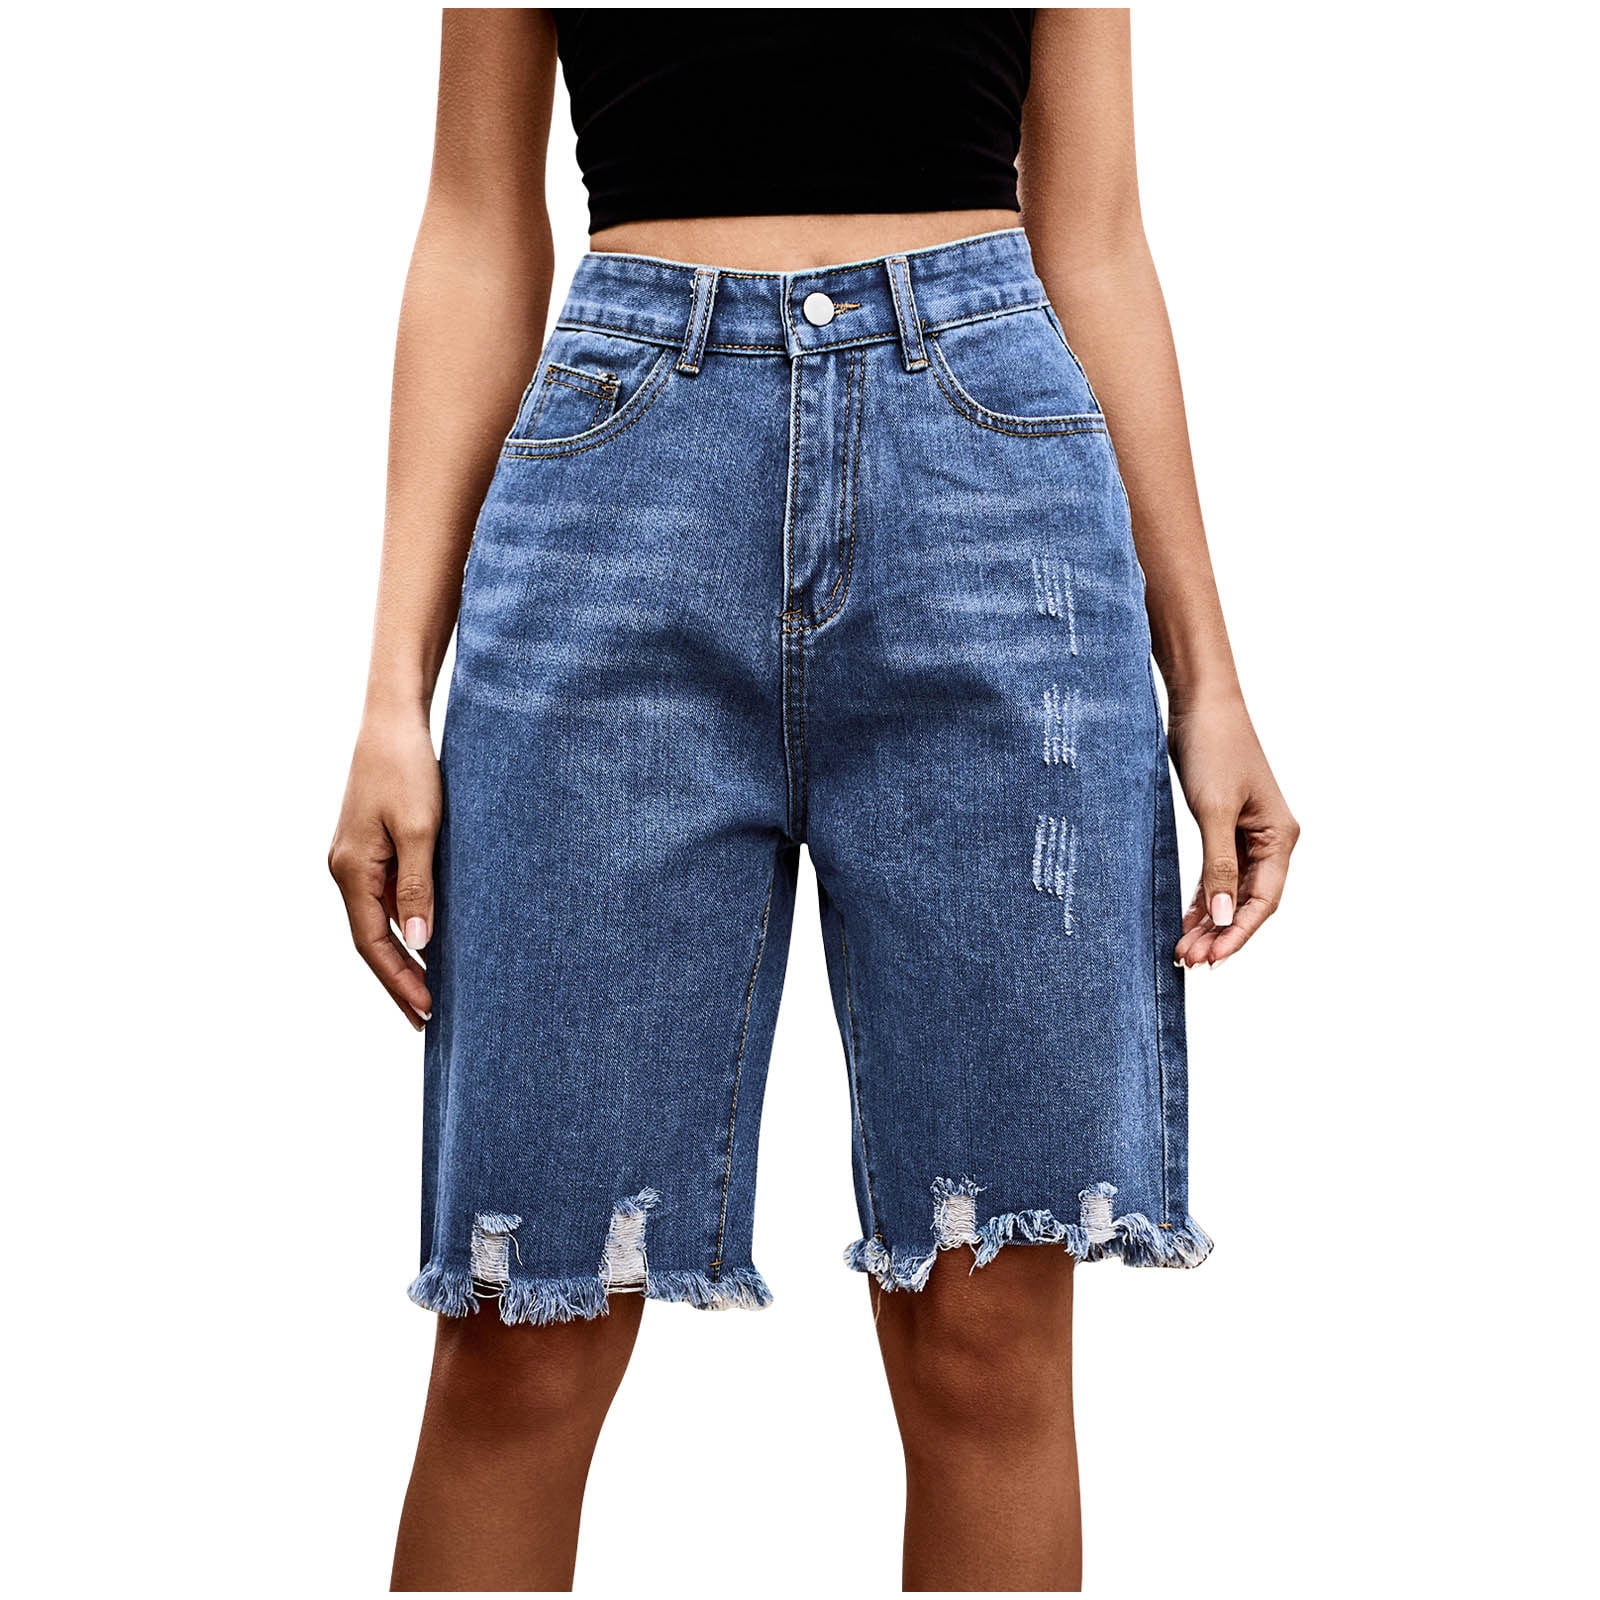 Ripped Denim Shorts Women Pocket Loose Fashion High Waist Knee Length Shorts  2022 Summer Casual Stretch Jeans Shorts Female - Shorts - AliExpress